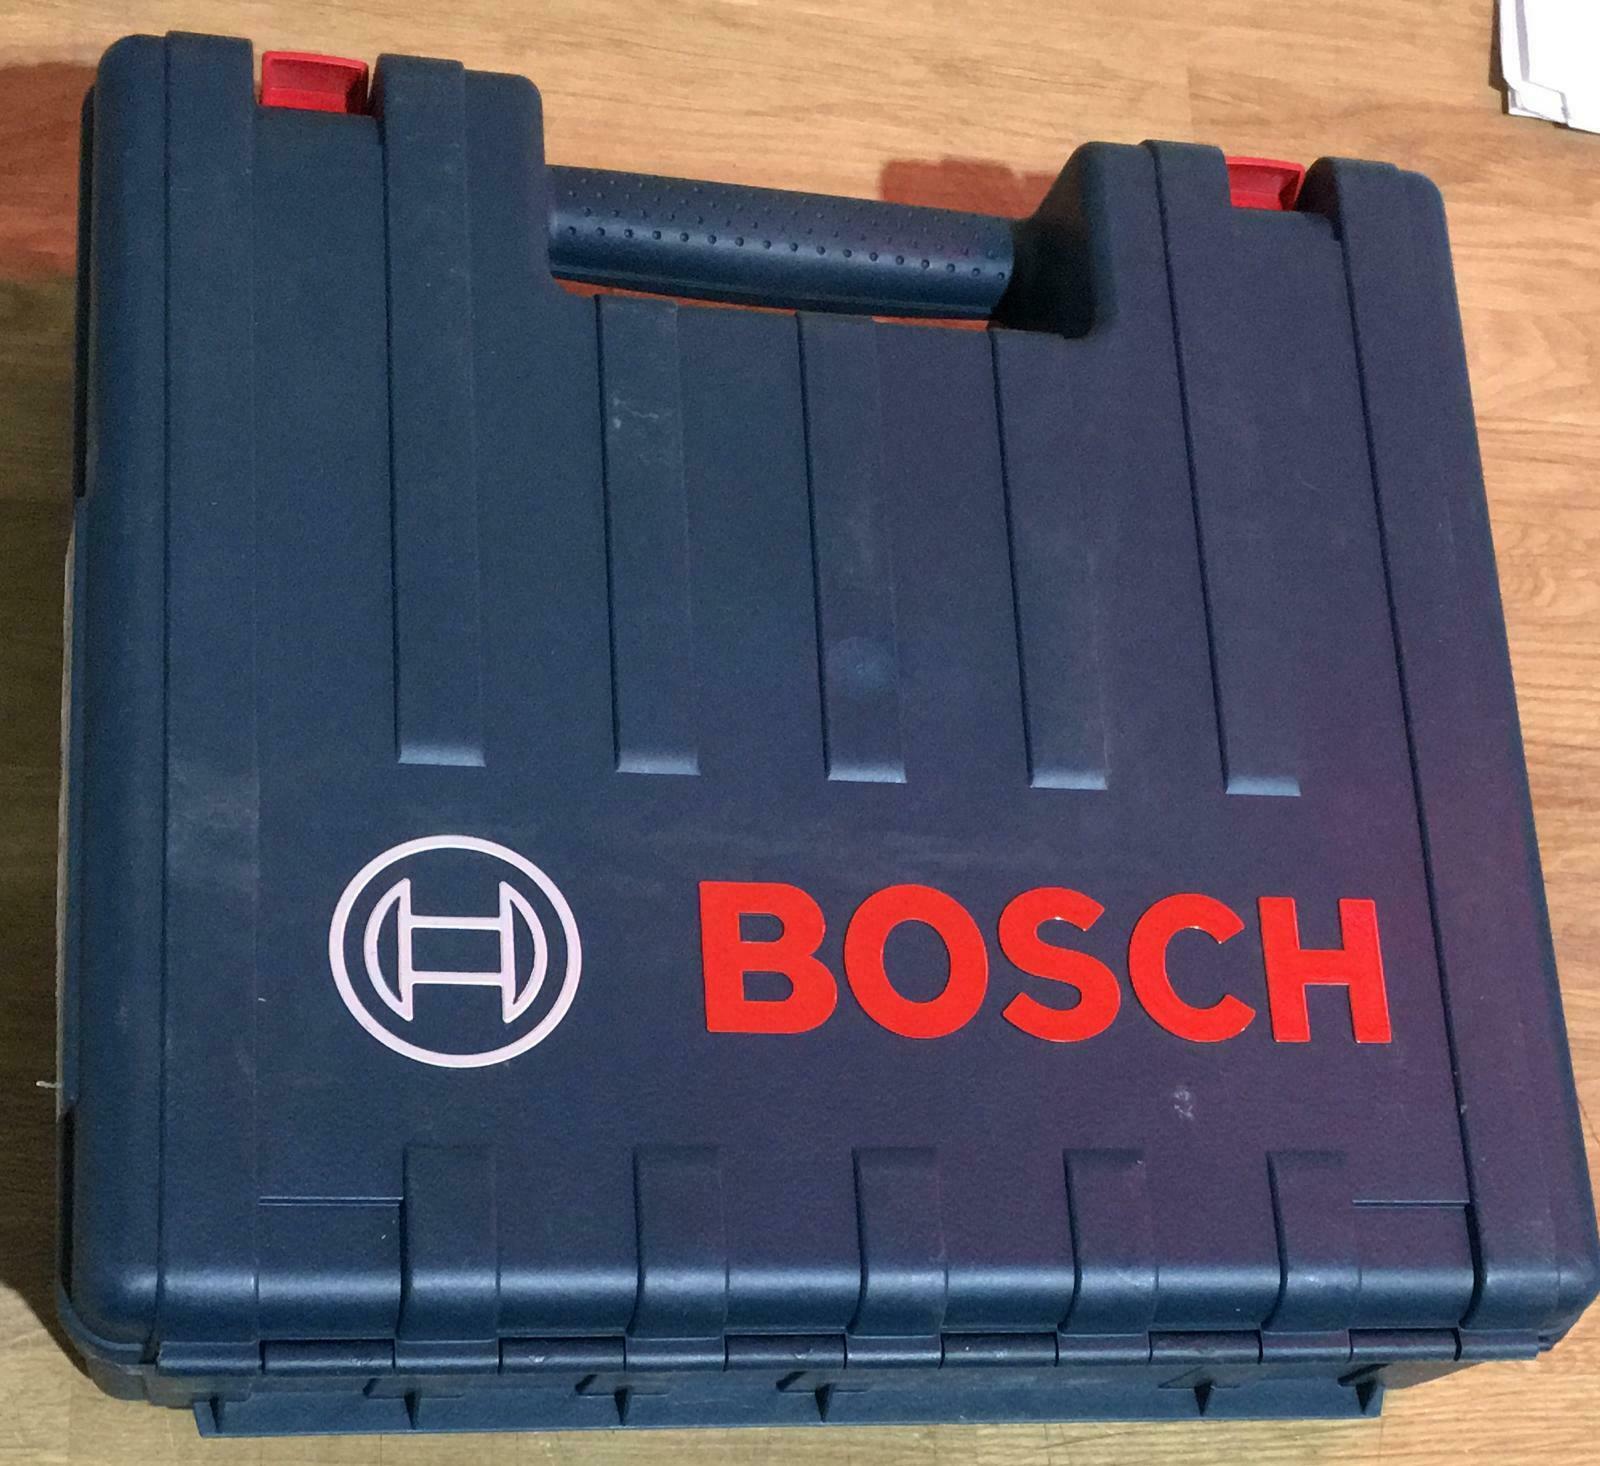 Bosch 500W 240V Corded Jigsaw PST 7200 E - 5817